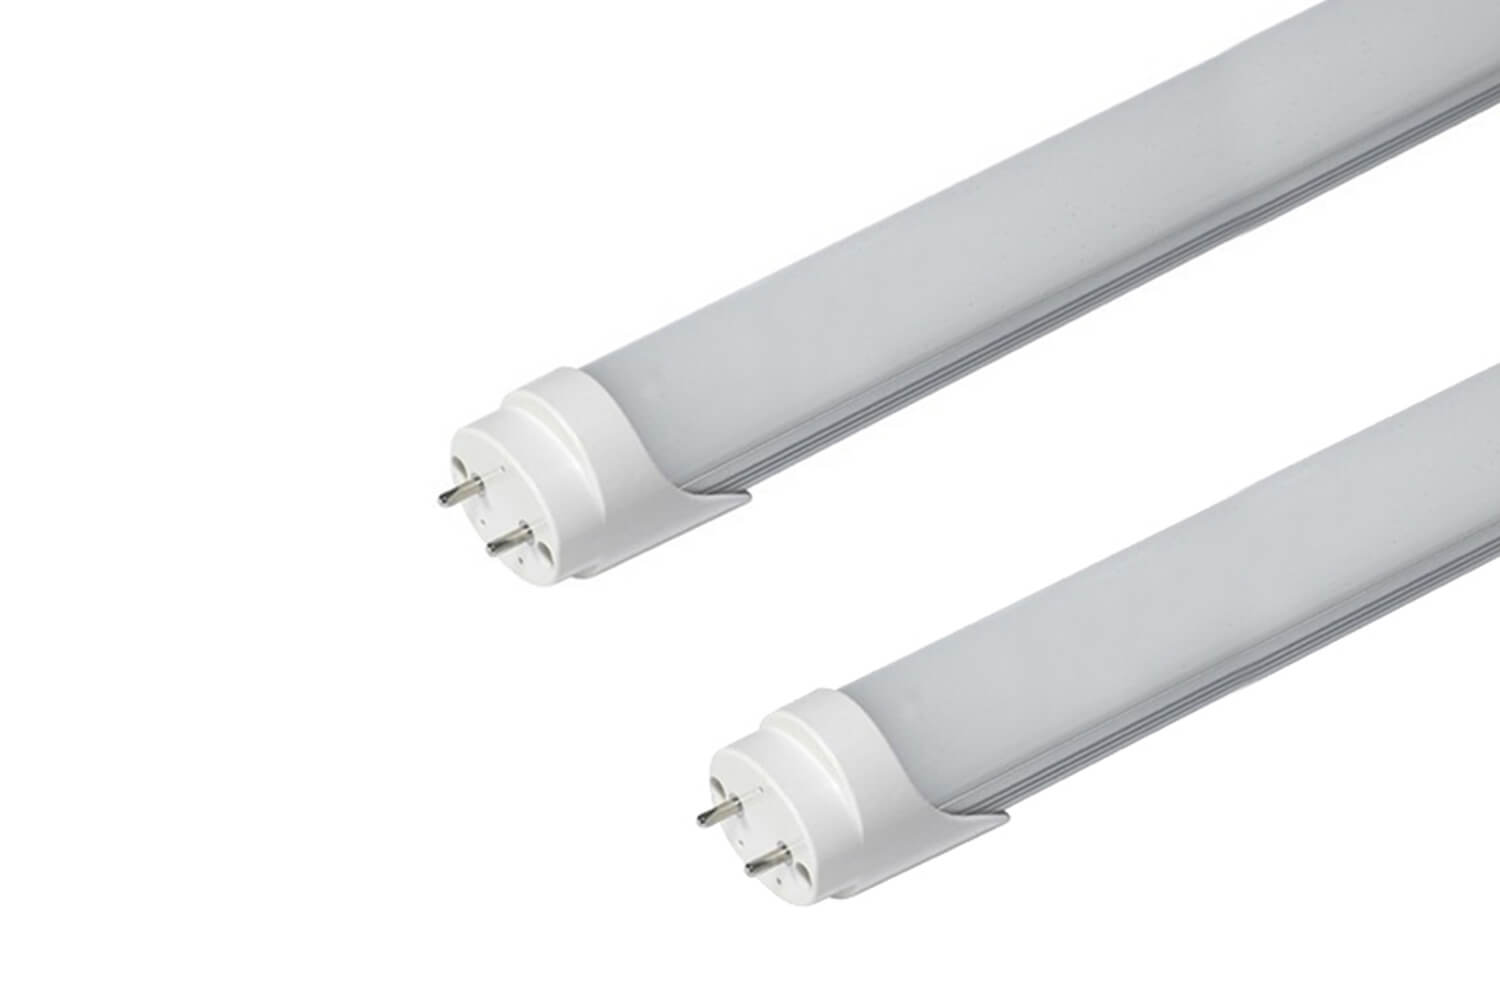 sap blok oor LED TL lampen T8 - 4000K wit licht online kopen? → Dierencompleet.nl